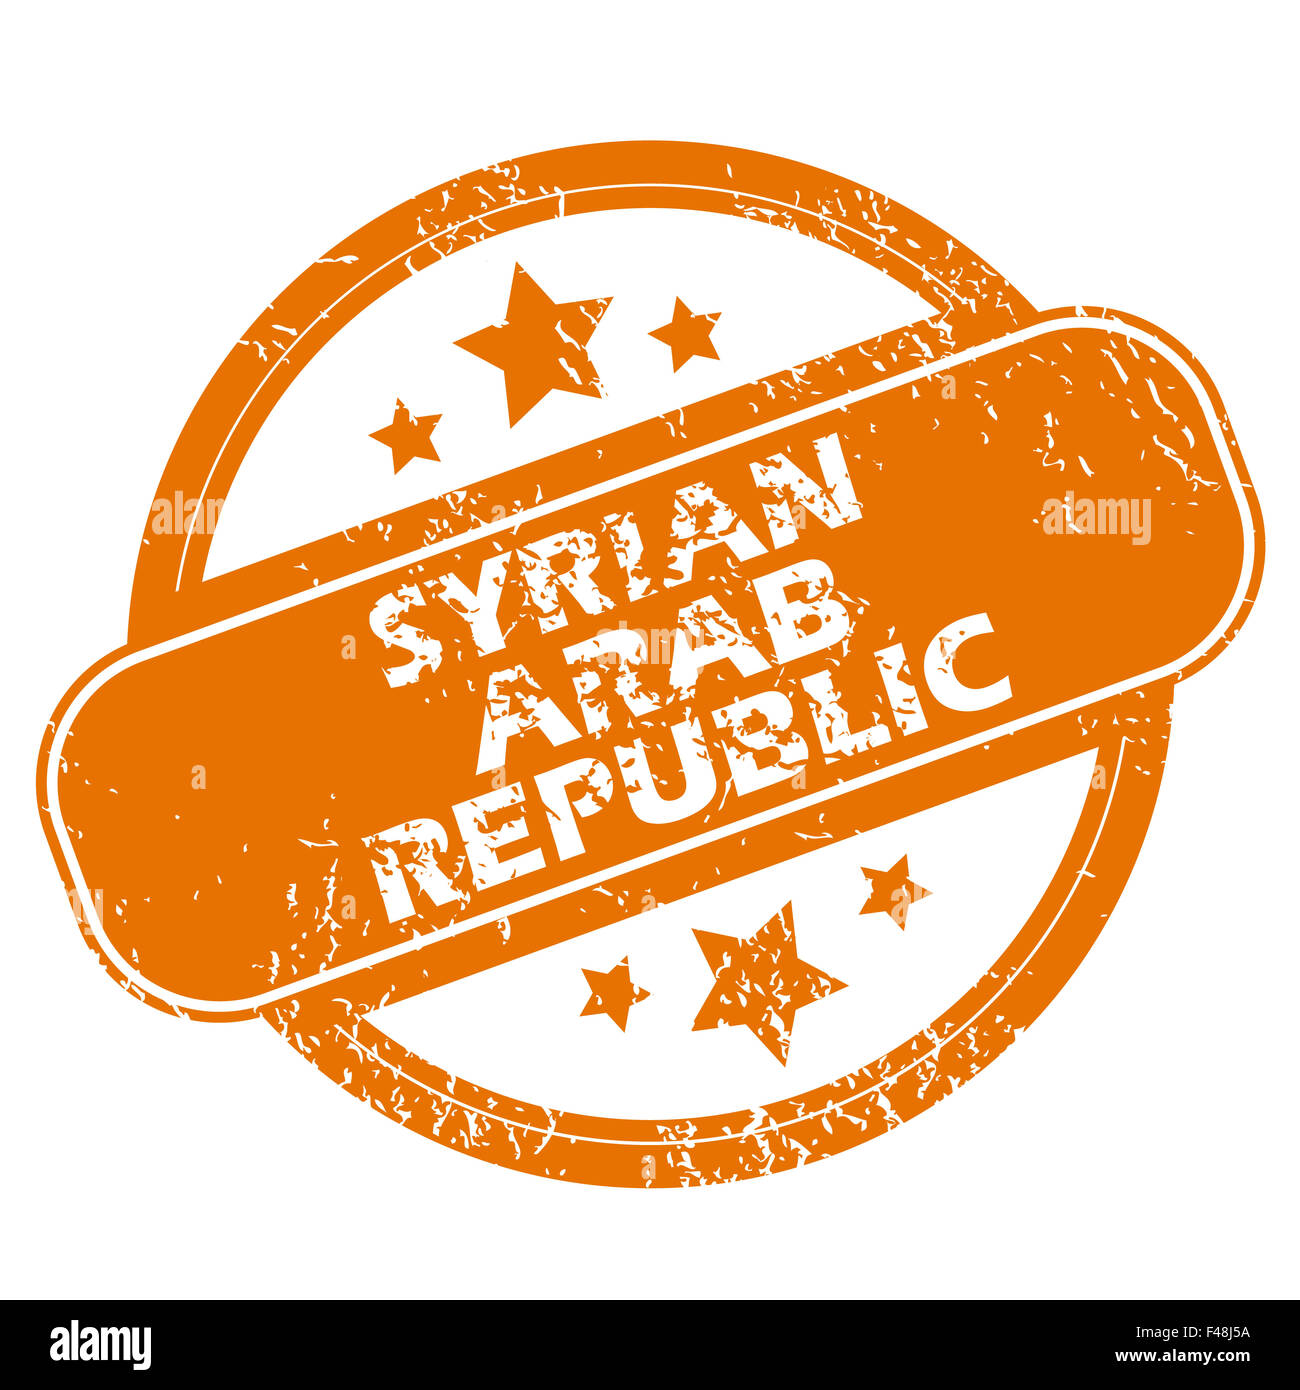 Syrian Arab Republic grunge icon Stock Photo